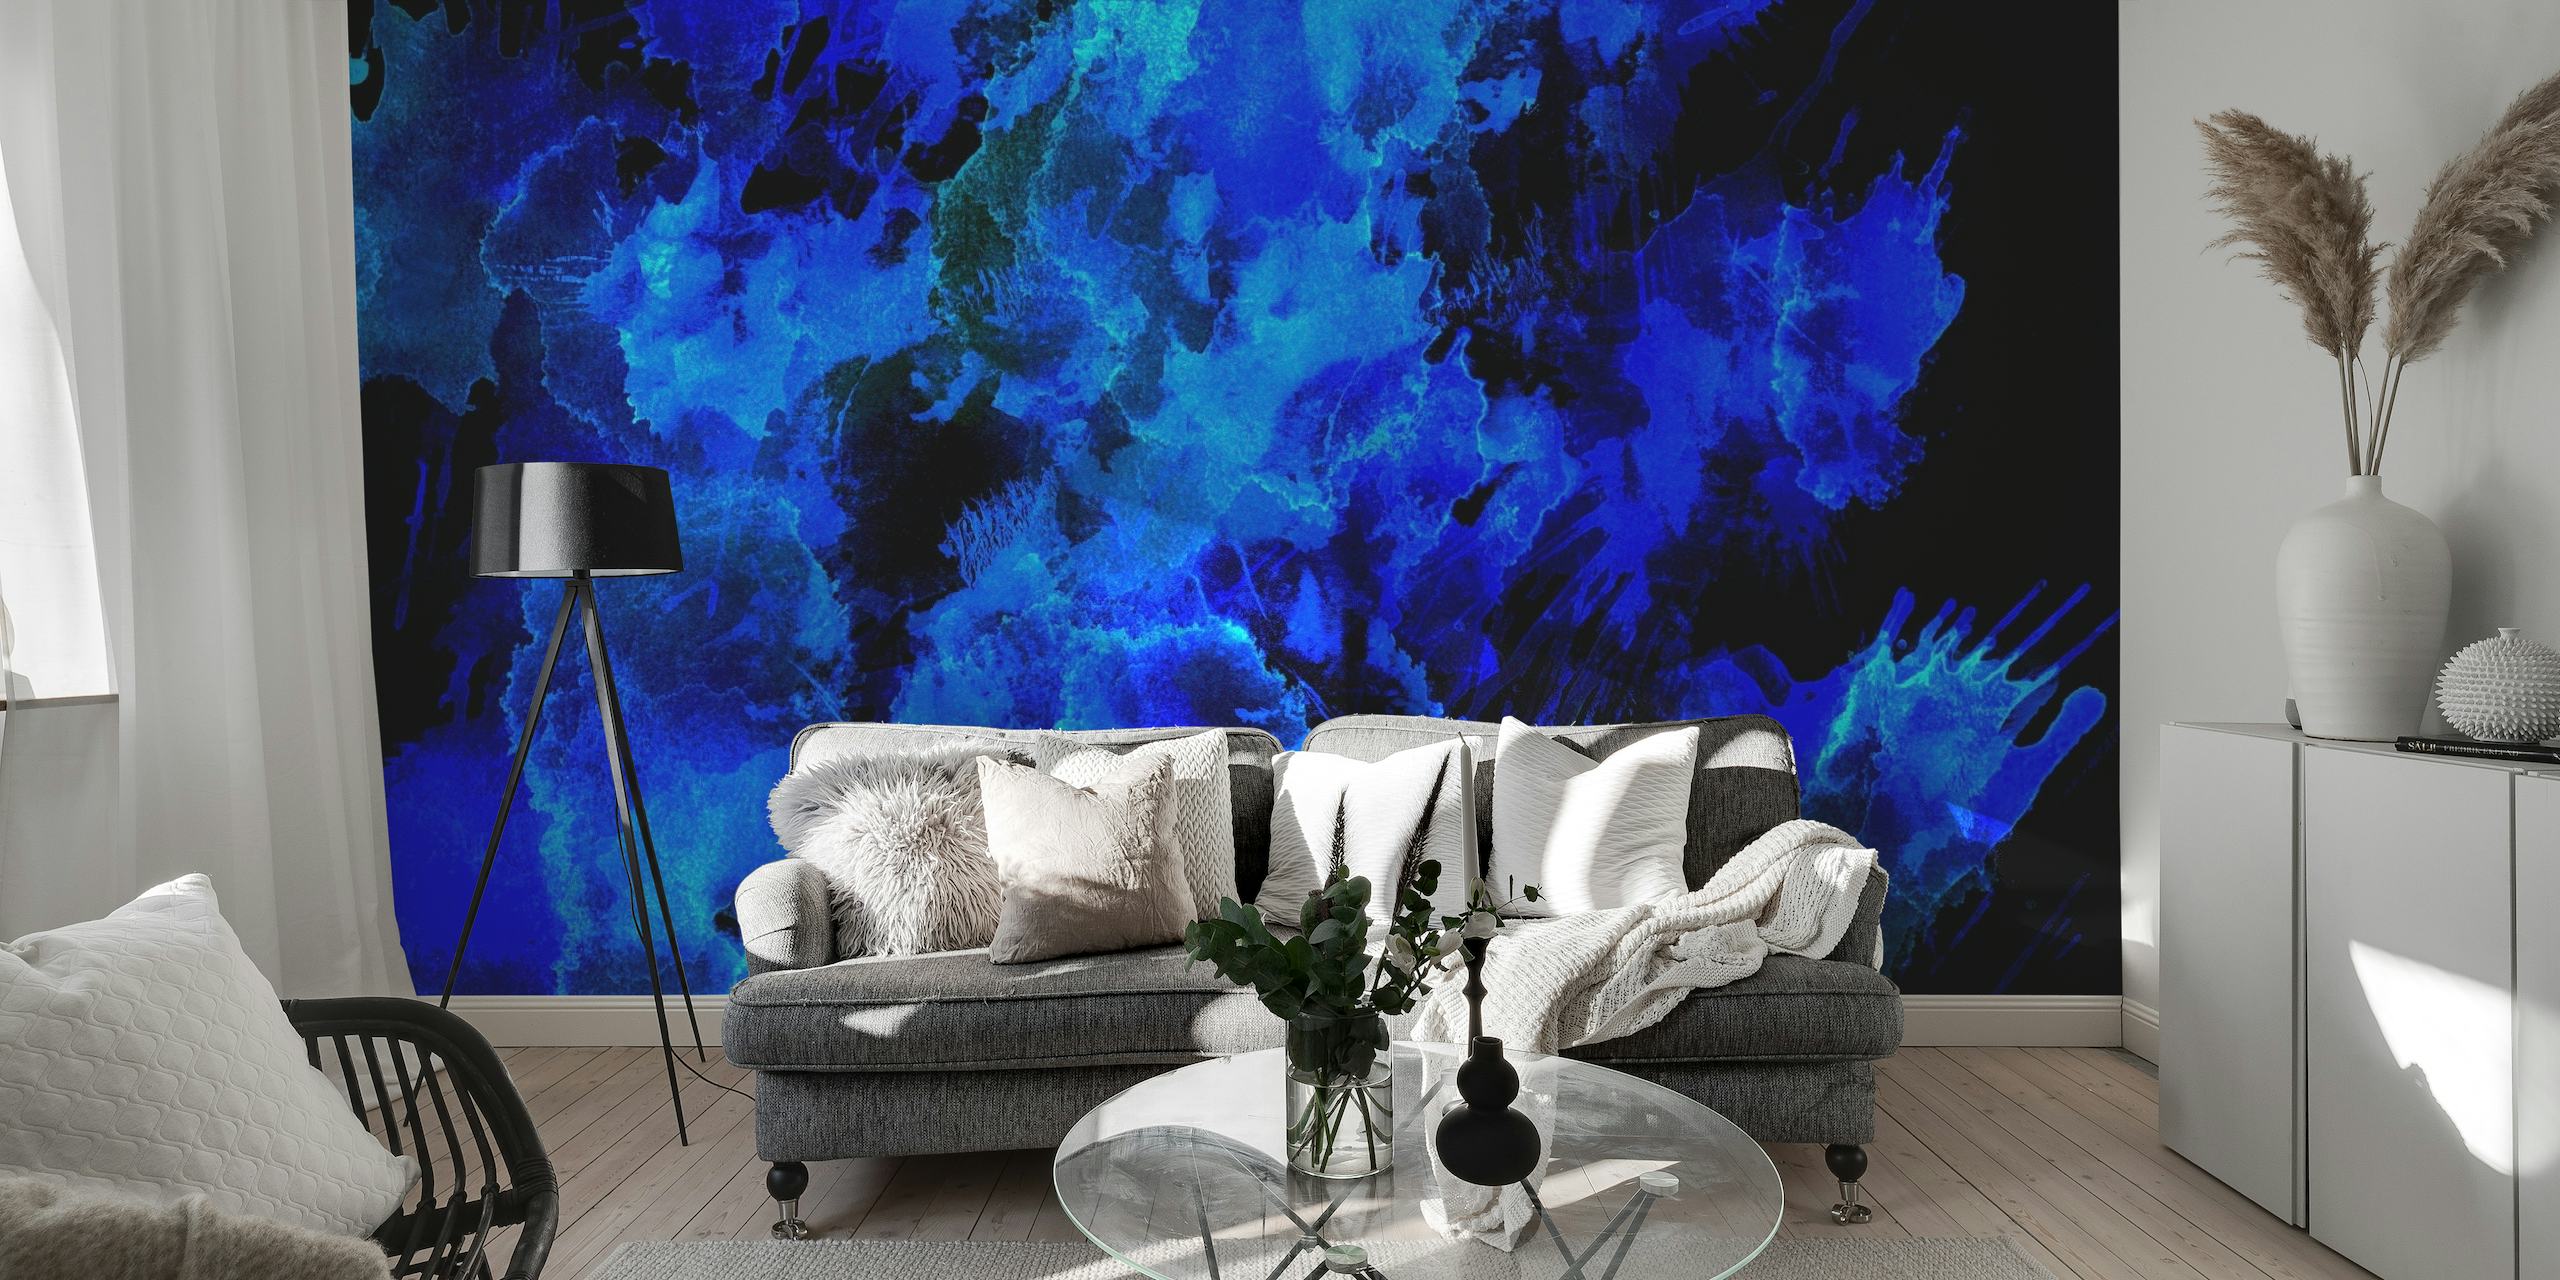 Mural abstrato em tons de azul invocando a beleza do céu noturno ou das profundezas do oceano